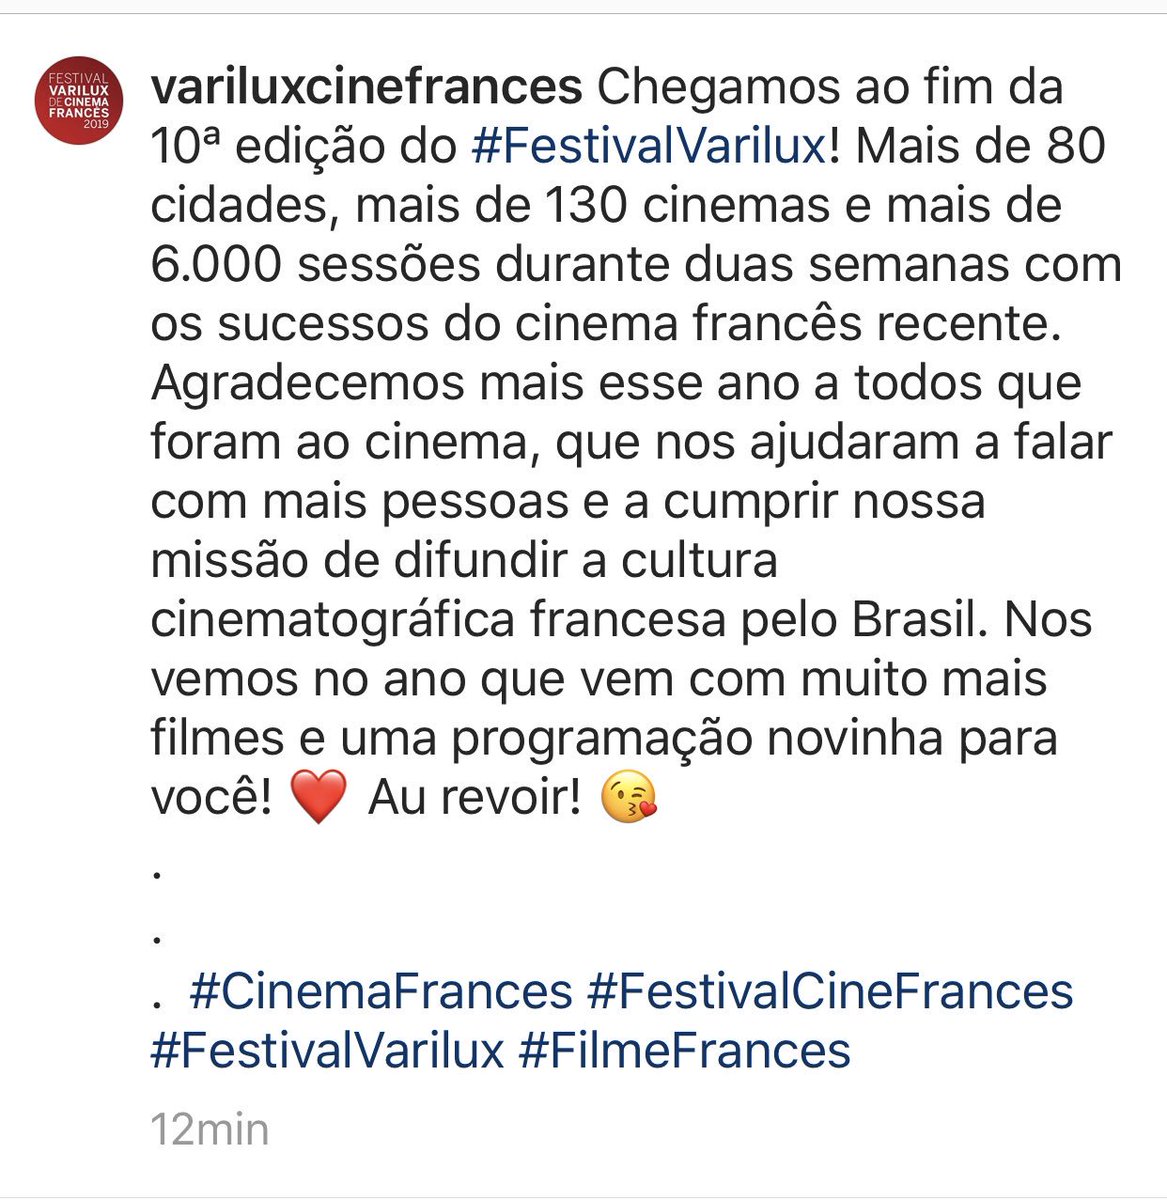 #FestivalVarilux #CinemaFrances #FestivalCineFrances #FilmeFrances